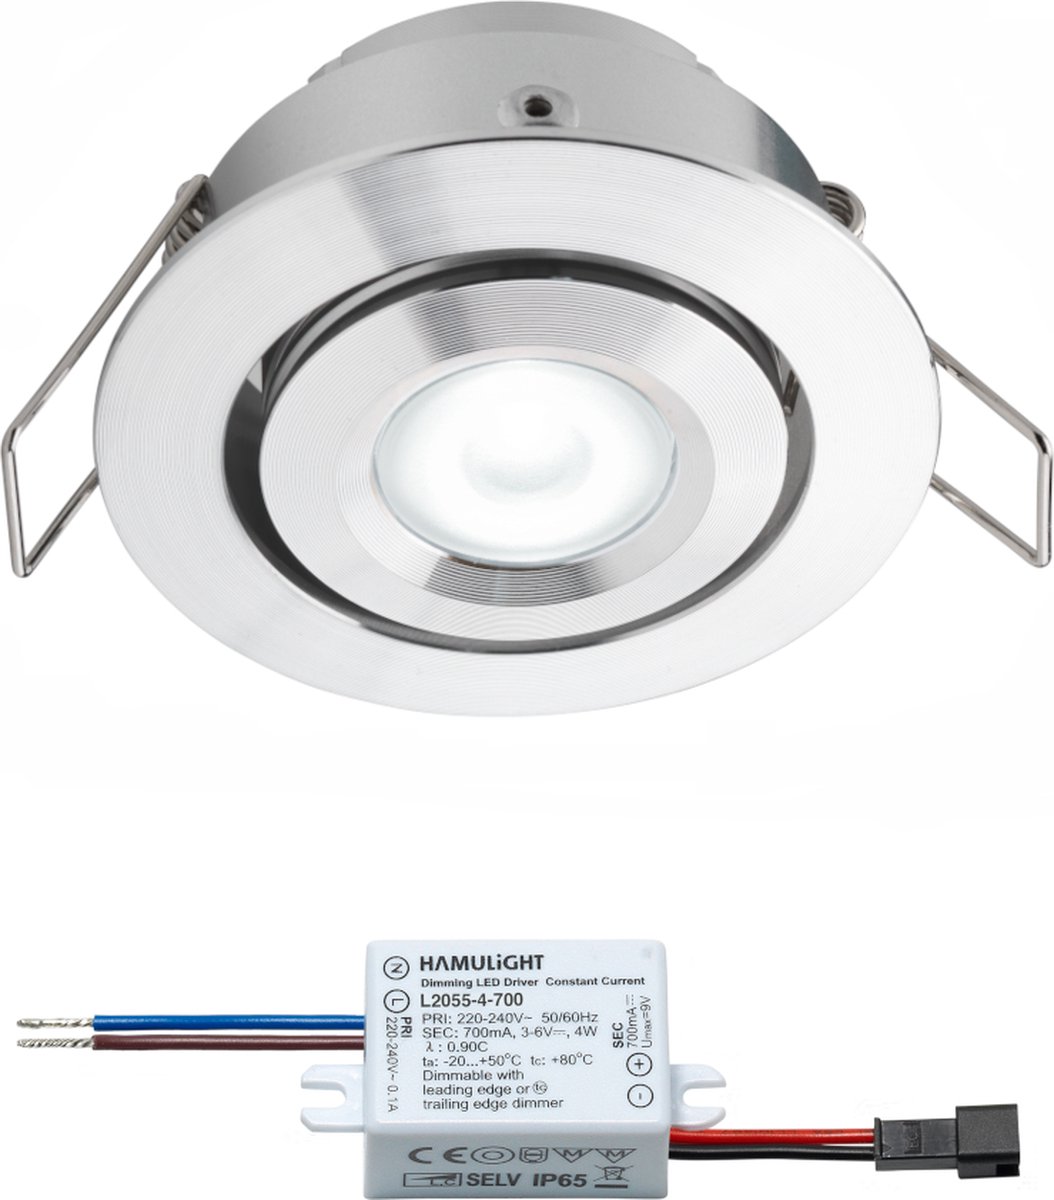 Cree LED inbouwspot Toledo in - witlicht - spotjes / downlights / plafondspots - 3W / rond / dimbaar / kantelbaar / 230V / IP44